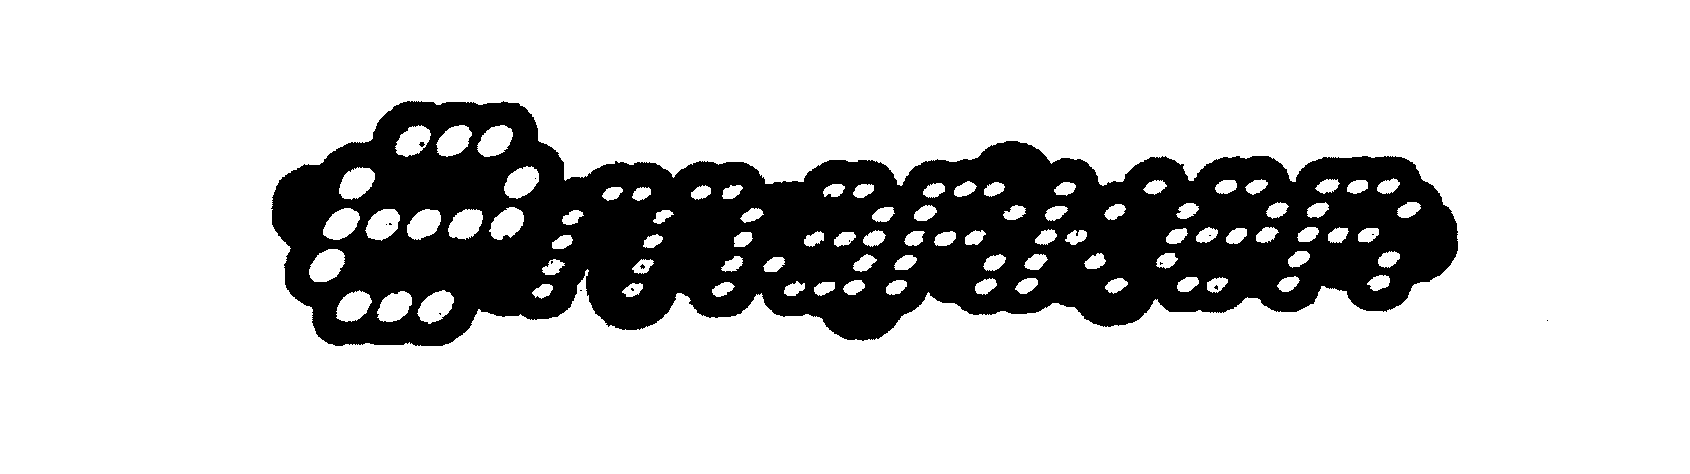 Trademark Logo EMARKER